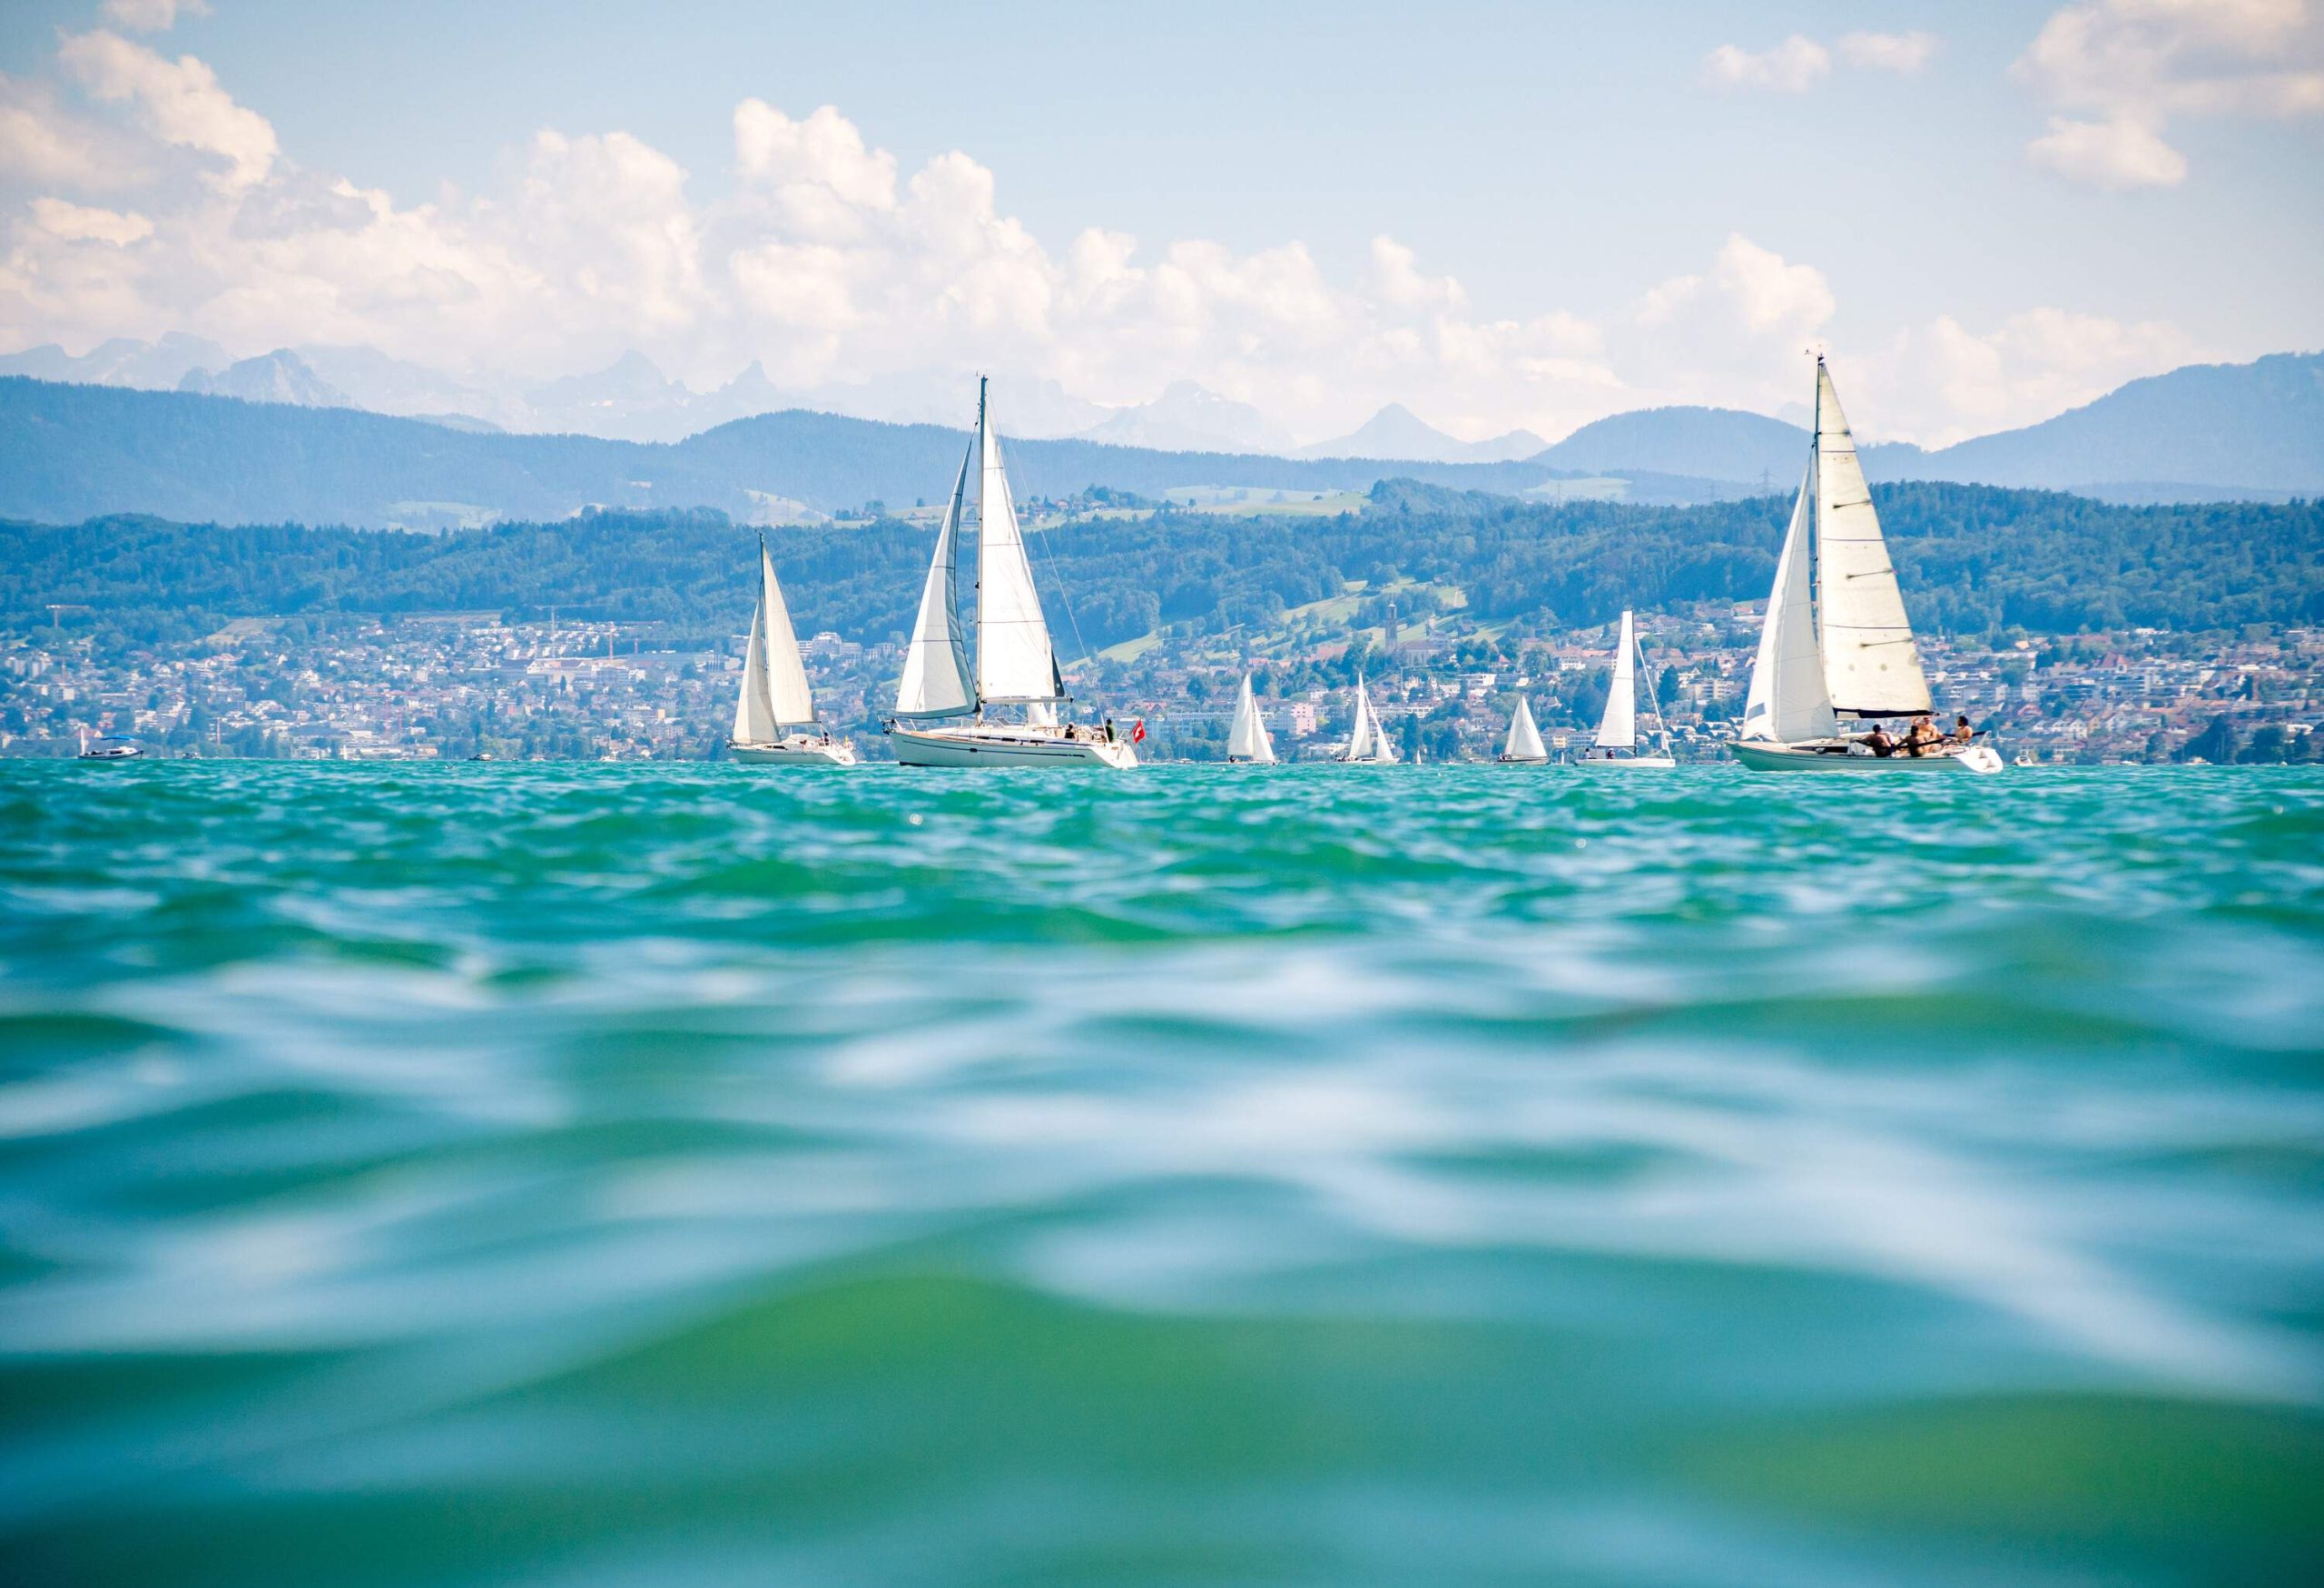 A fleet of sailing boats cruising on a lake.